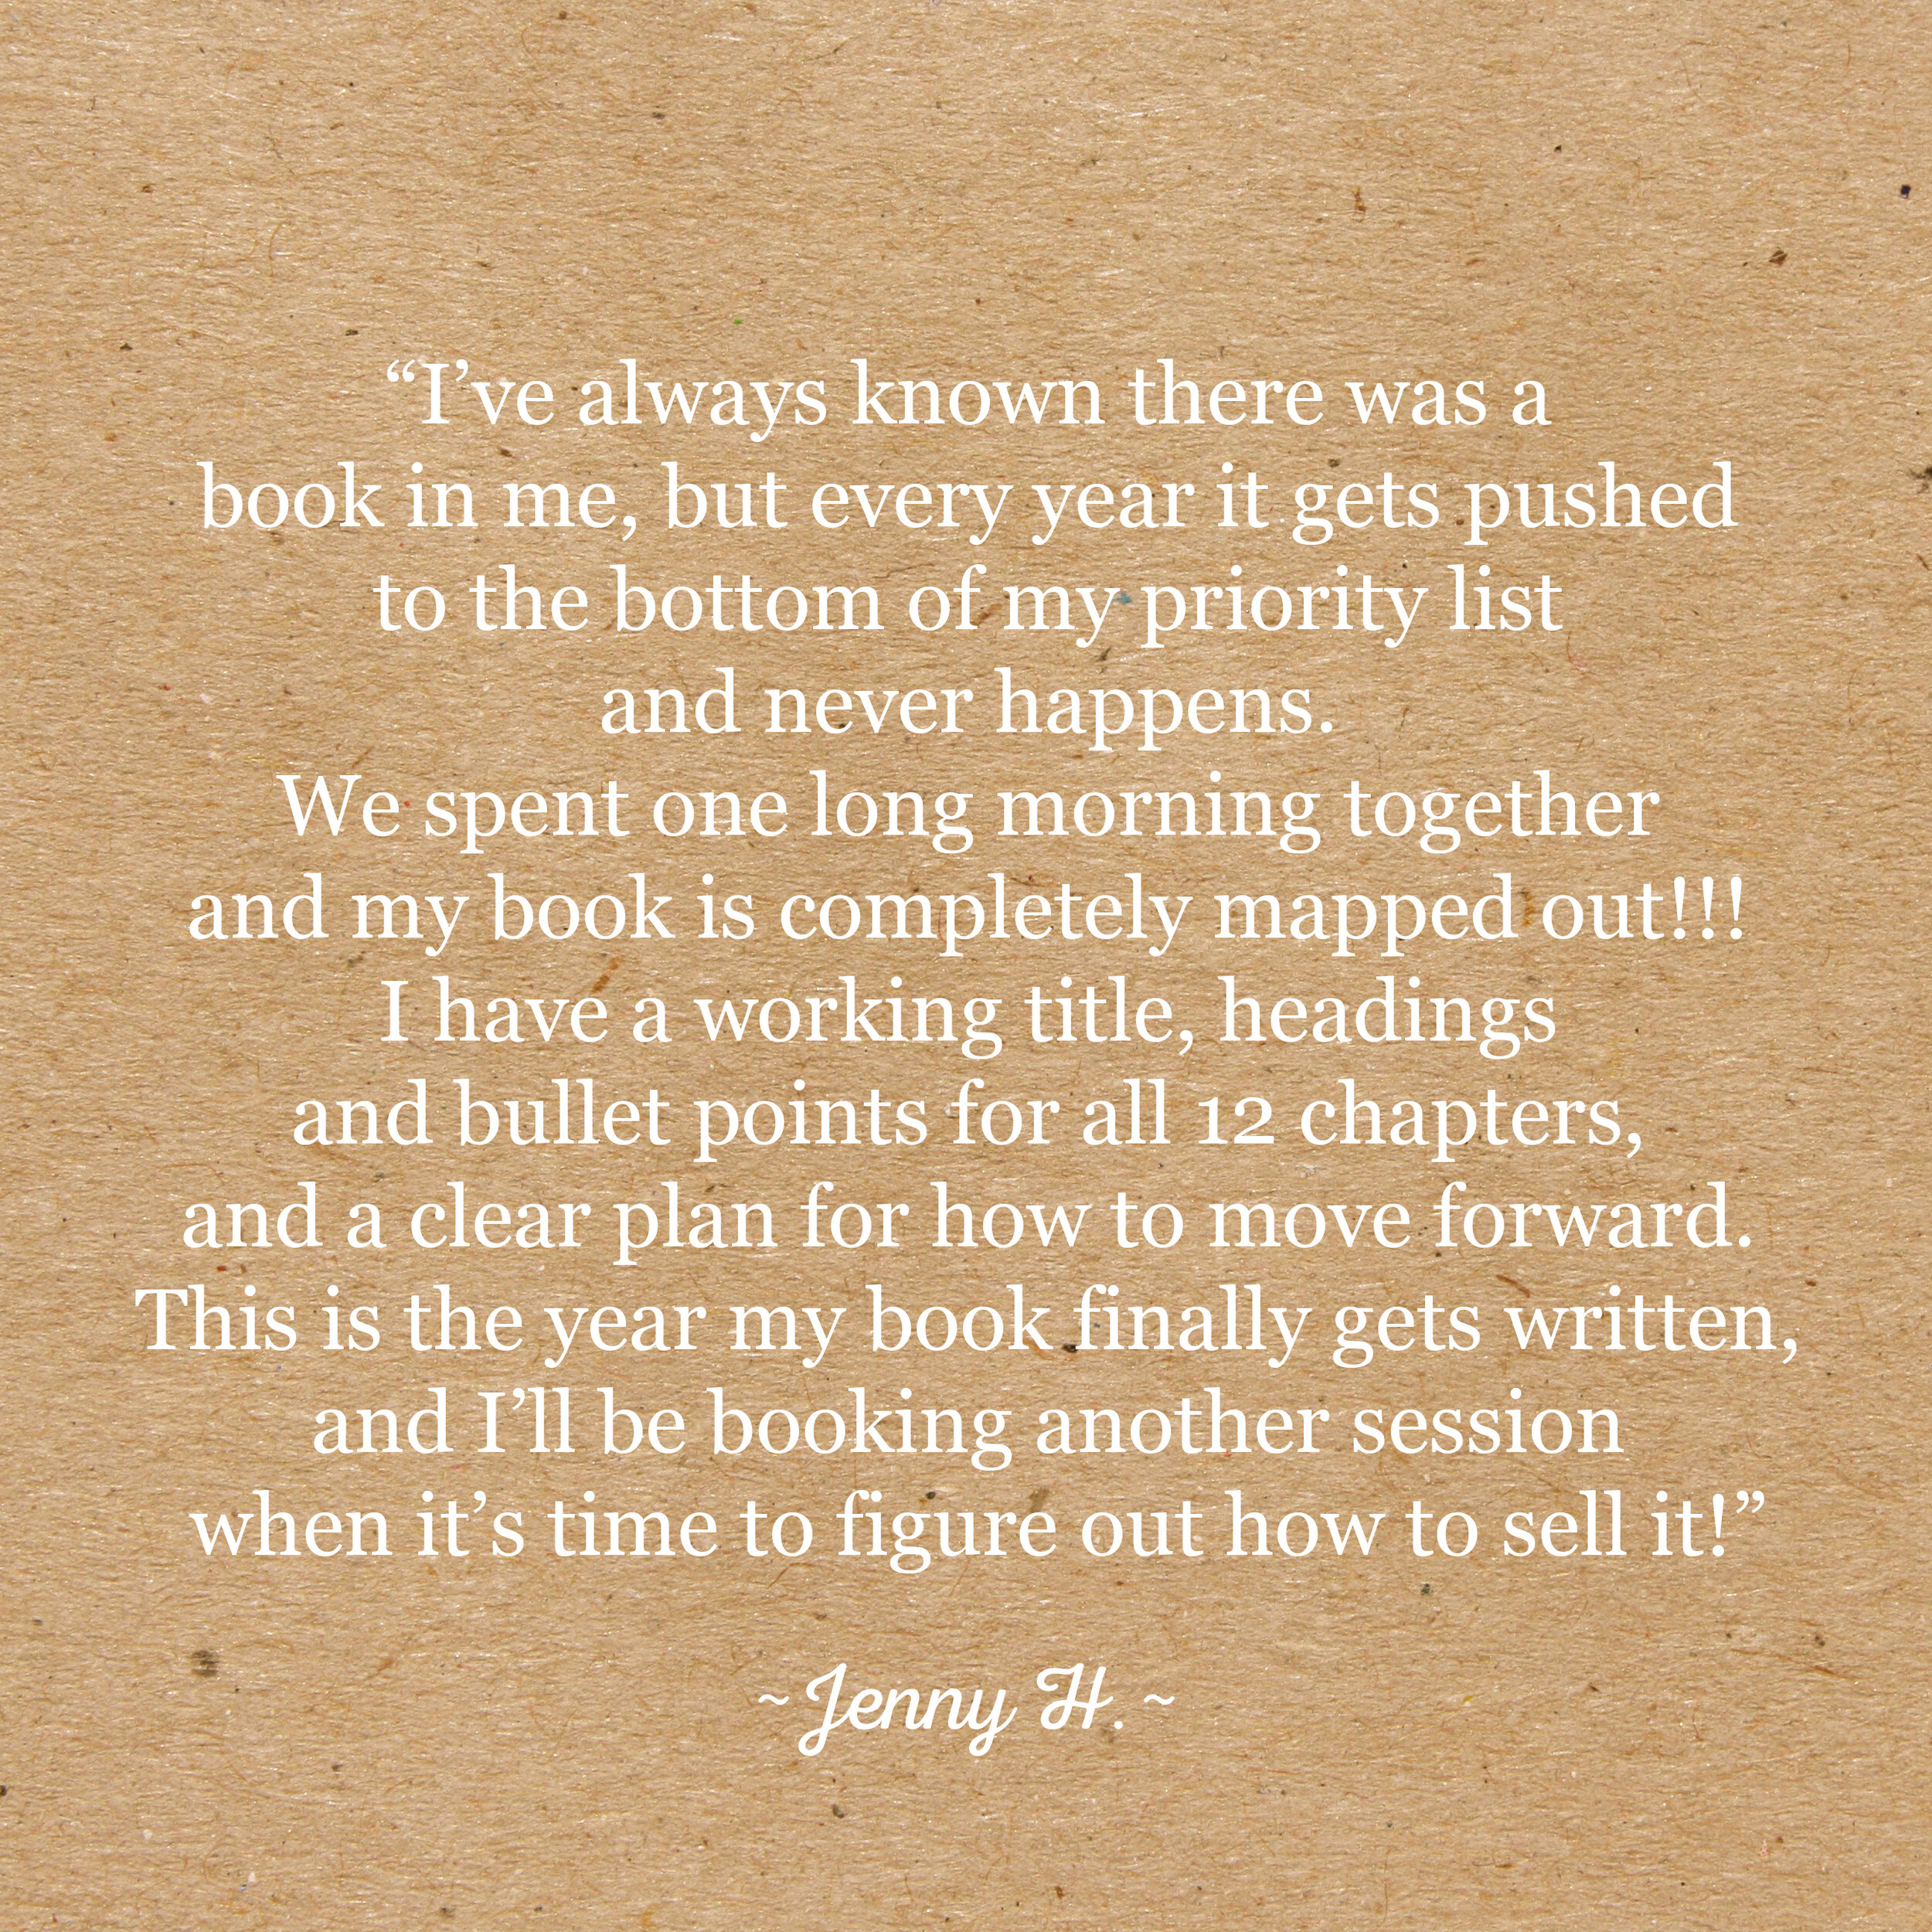 Book_testimonial_Jenny.jpg